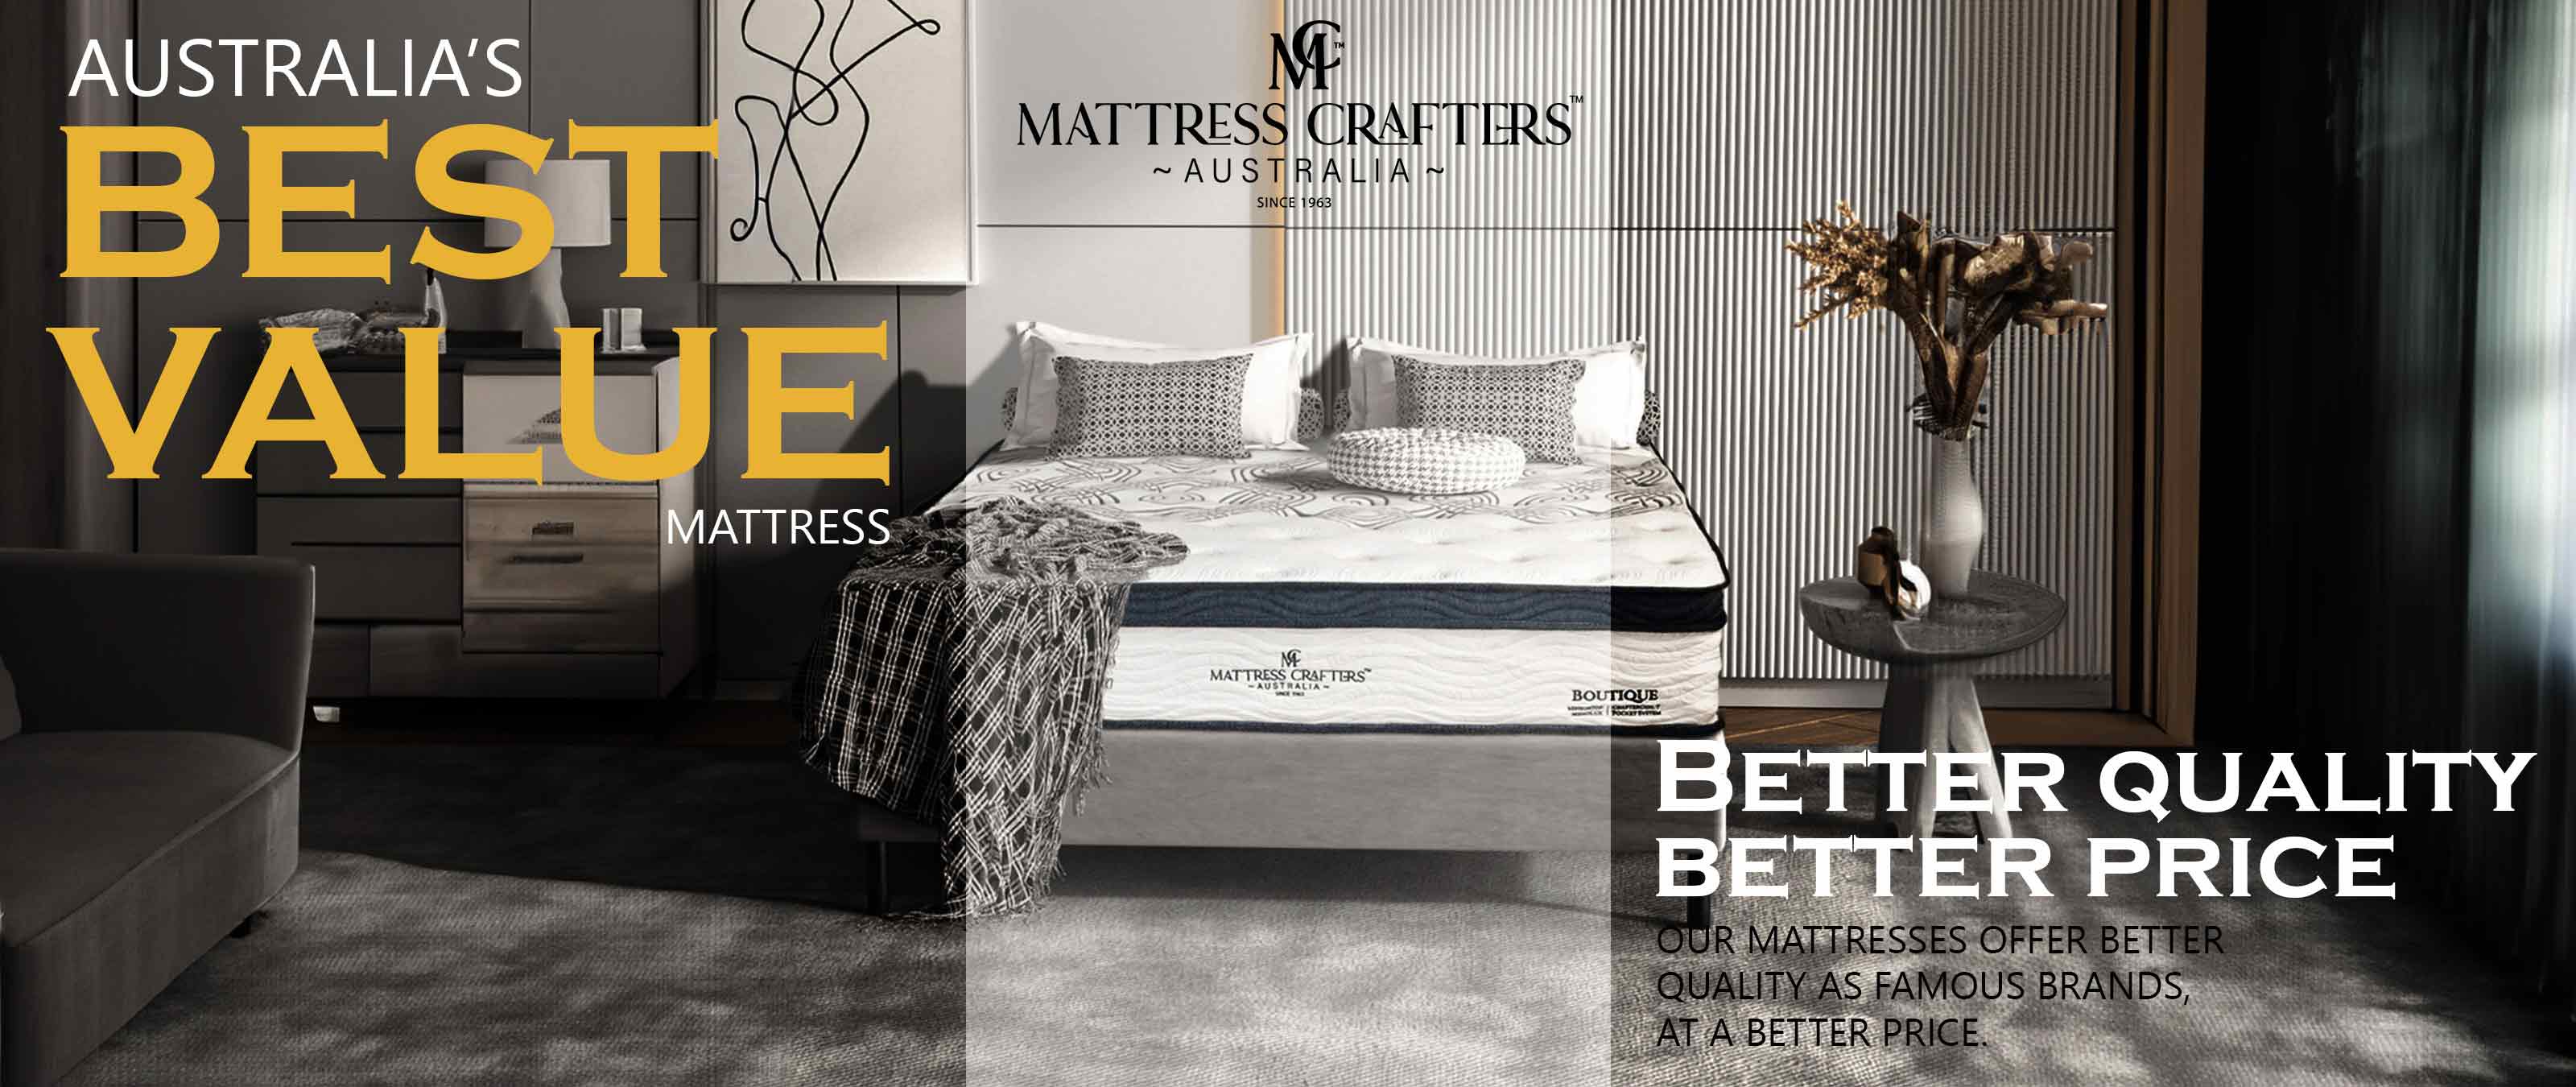 Australia best value mattress